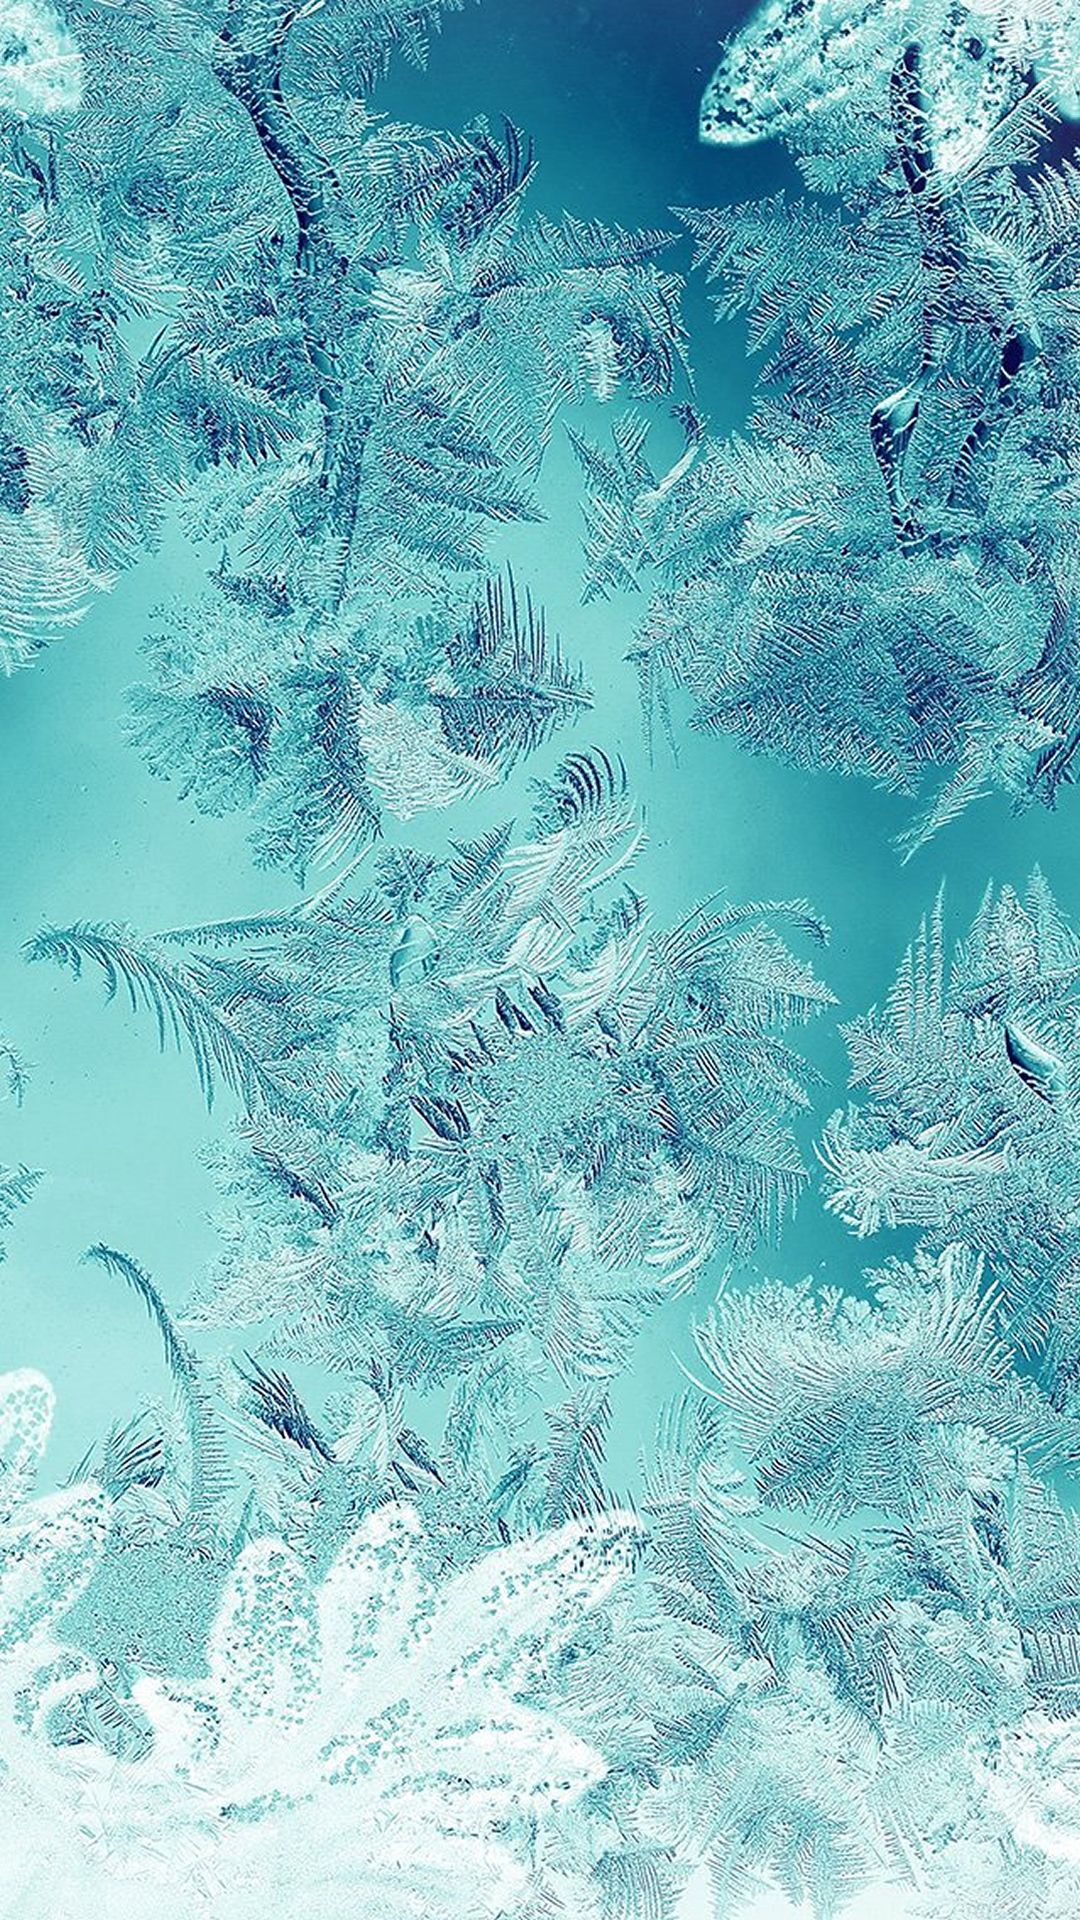 Ice Pattern Green Snow Nauture Christmas iPhone 6 Wallpaper Download. iPhone Wallpape. Snow wallpaper iphone, Wallpaper iphone christmas, iPhone wallpaper winter